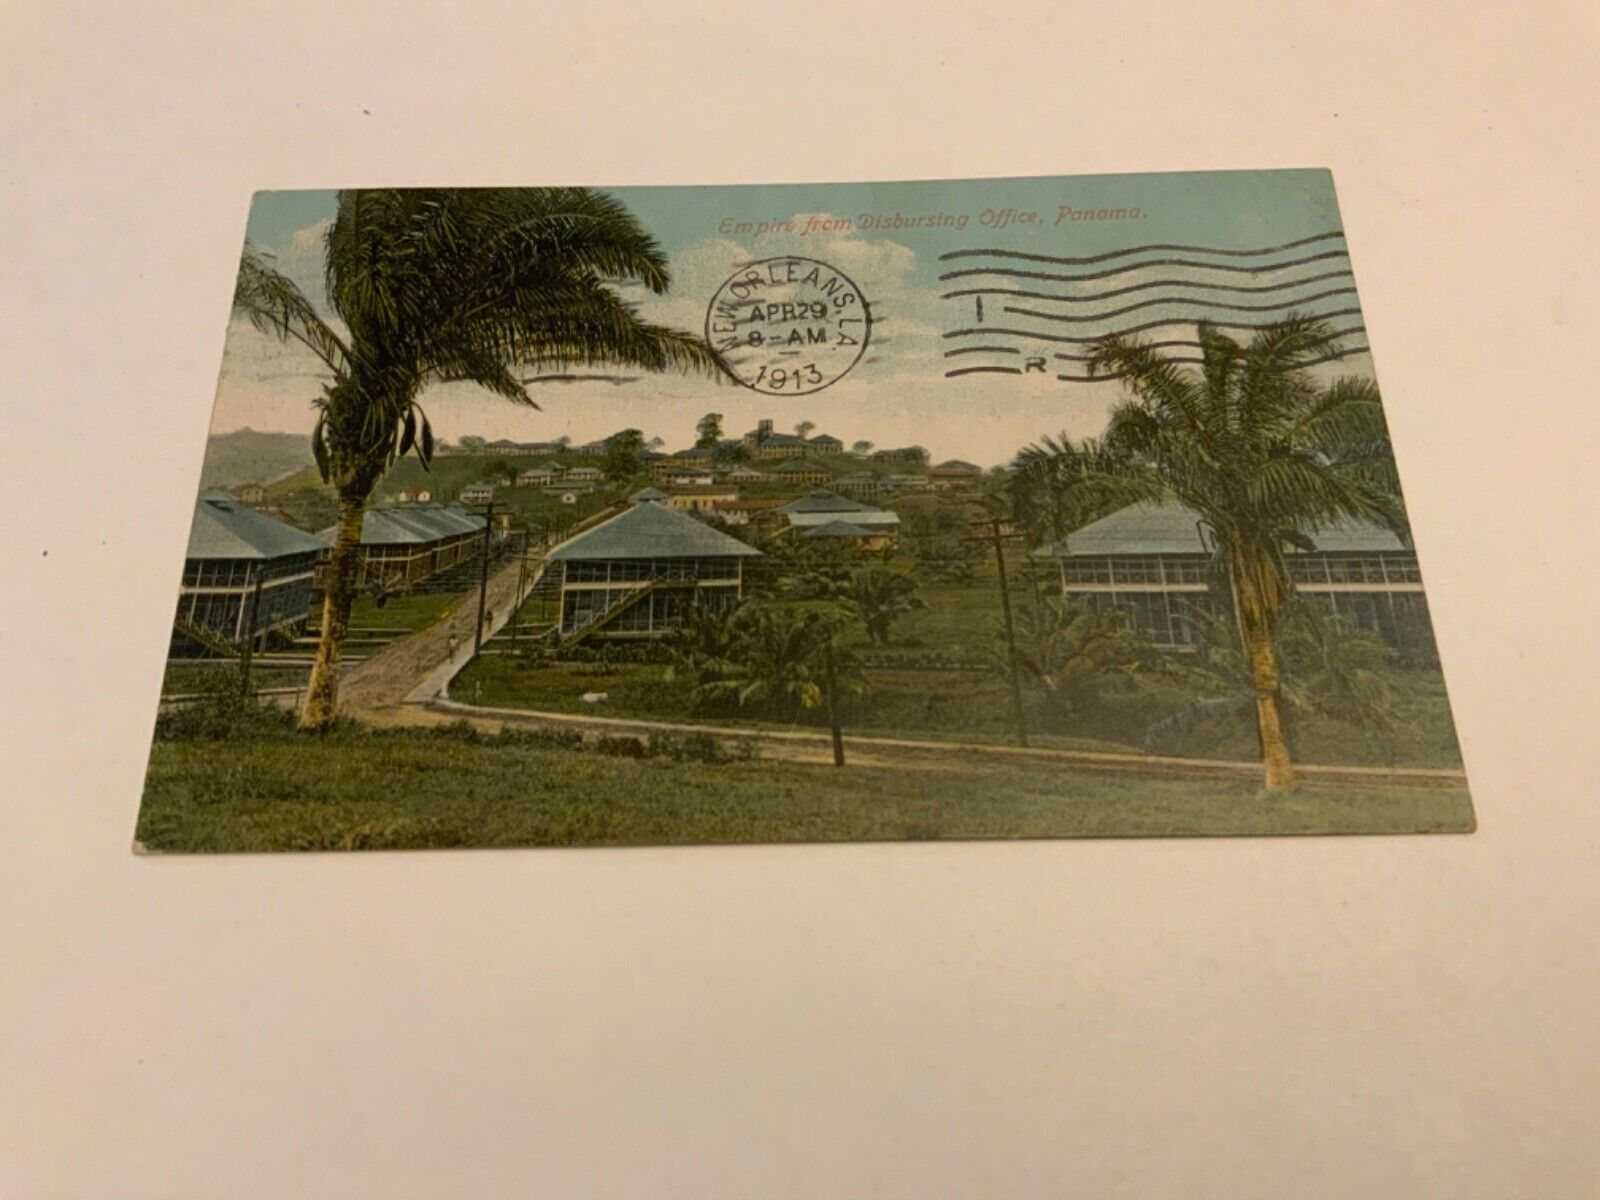 Panama ~ Empire from Disbursing Office -1913  Antique  Postcard